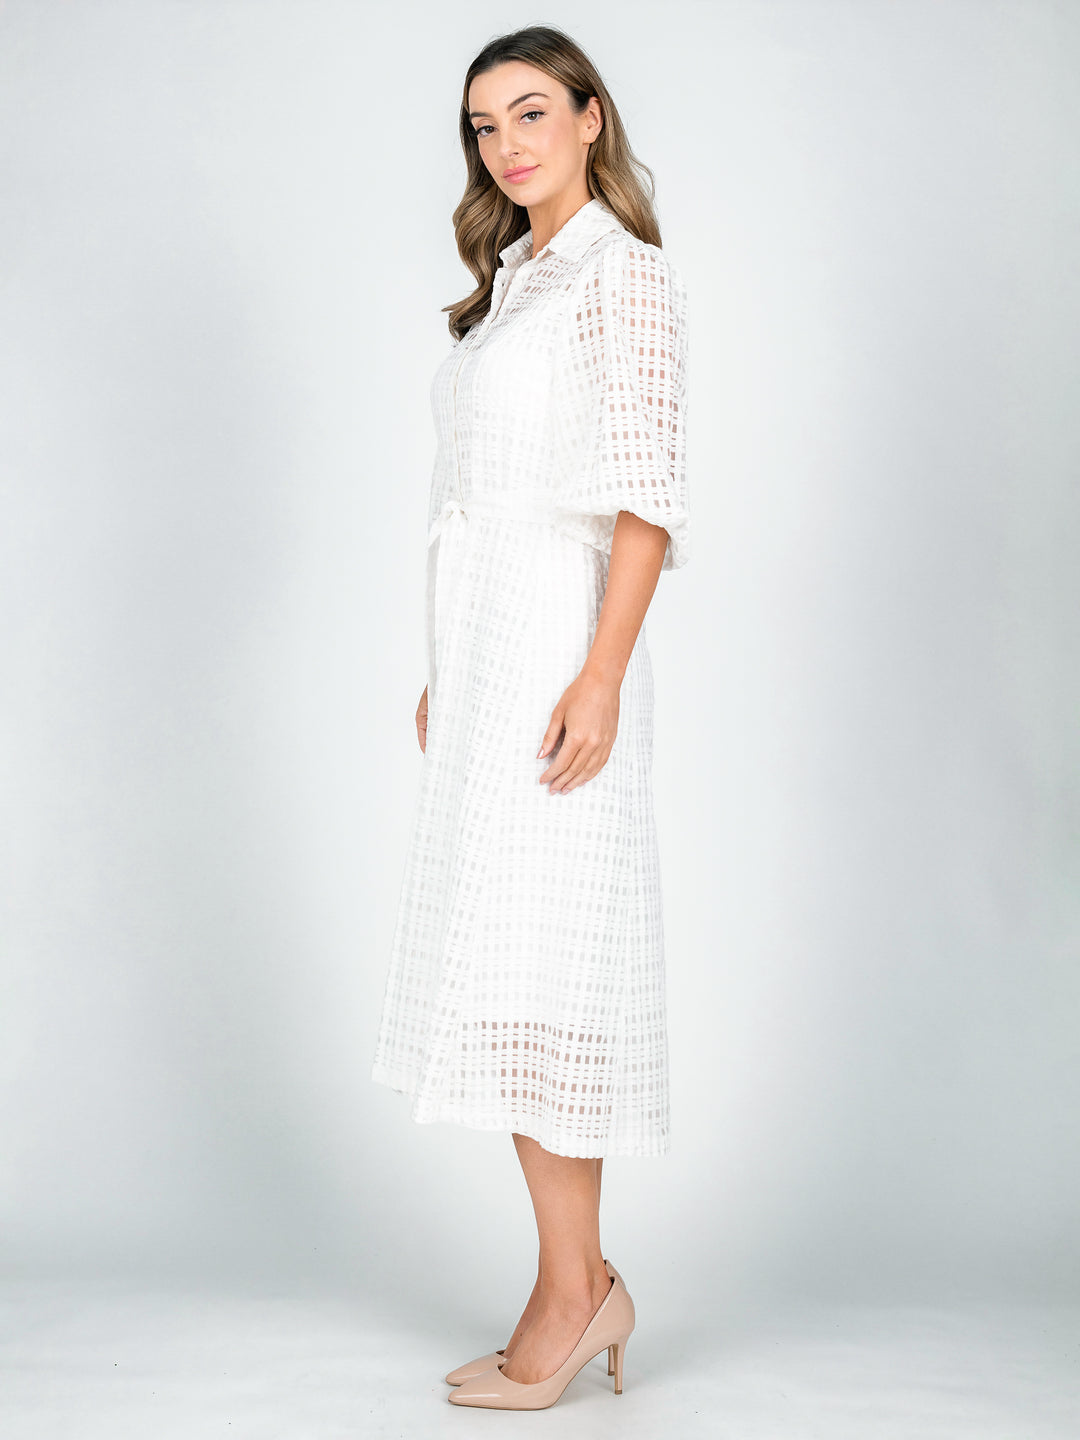 Side Women's sheer white shirt dress with blouson 3/4 length sleeves and a-line midi length skirt